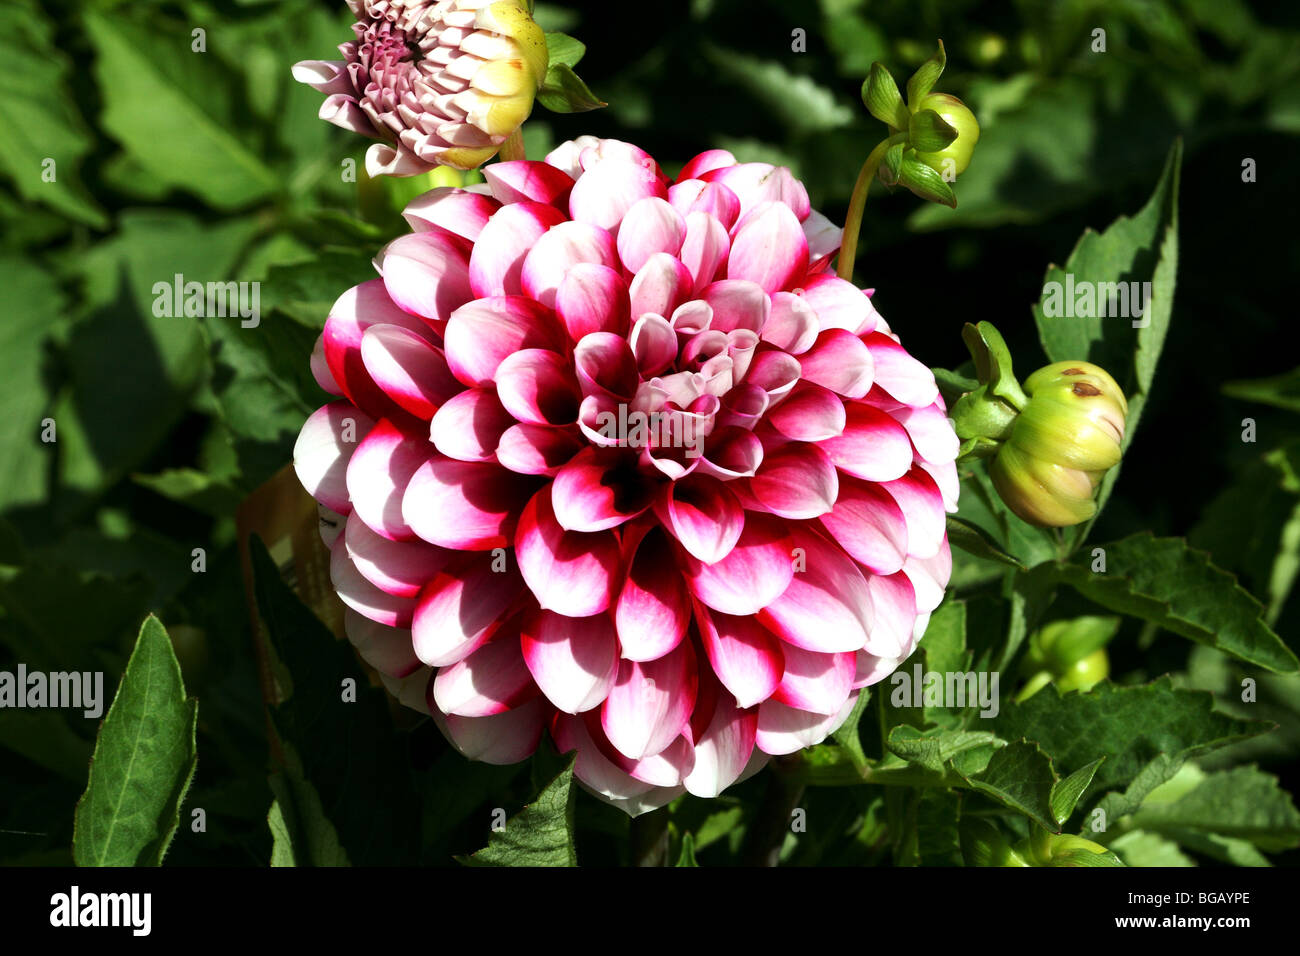 Dahlia Family Asteraceae Pink Flower in bloom showing macro detail Stock Photo